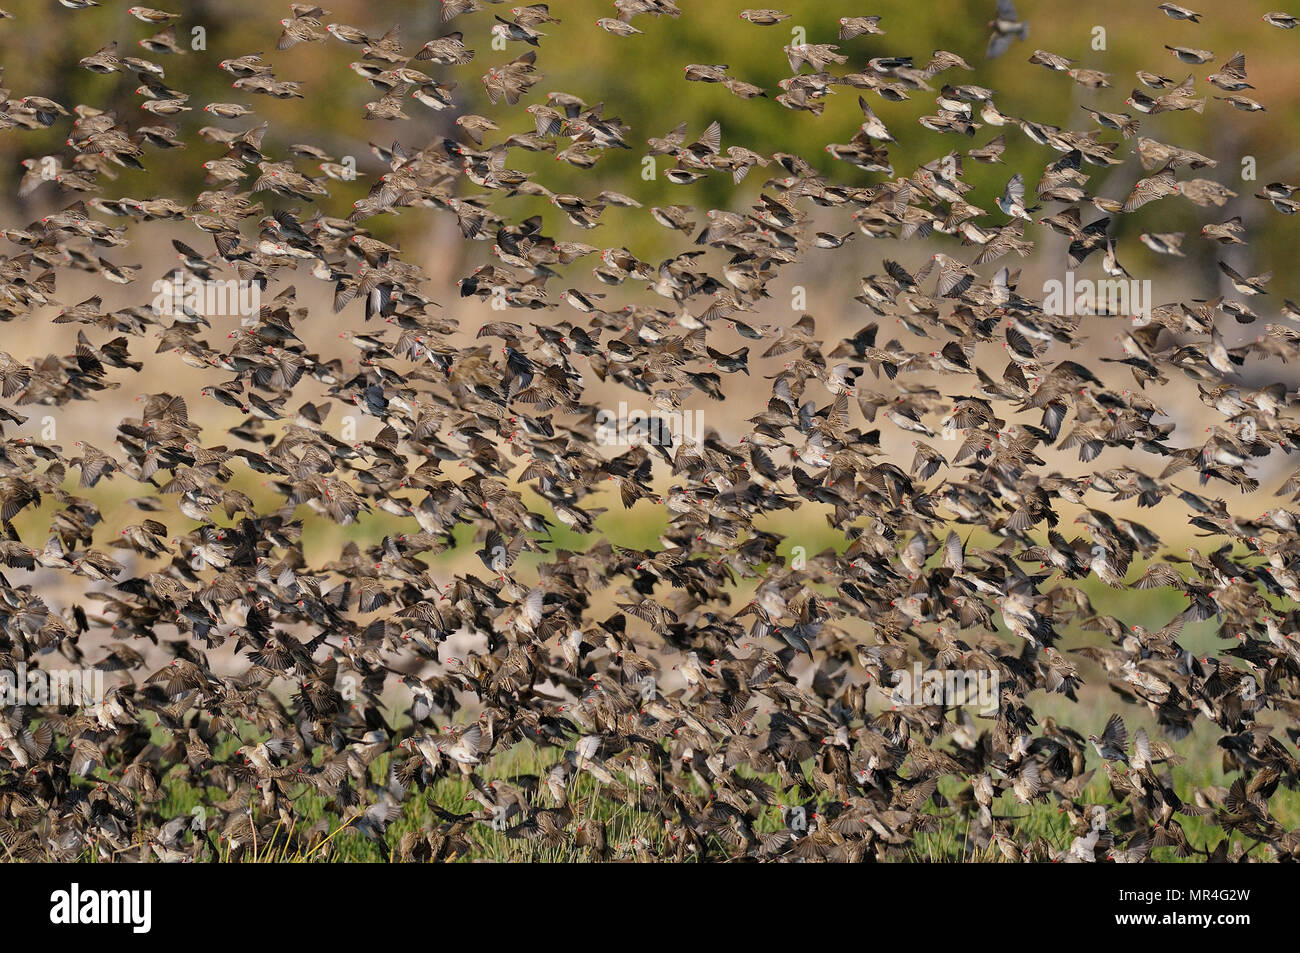 Redbilled quelea swarm in the air, (quelea quelea), etosha nationalpark, namibia Stock Photo